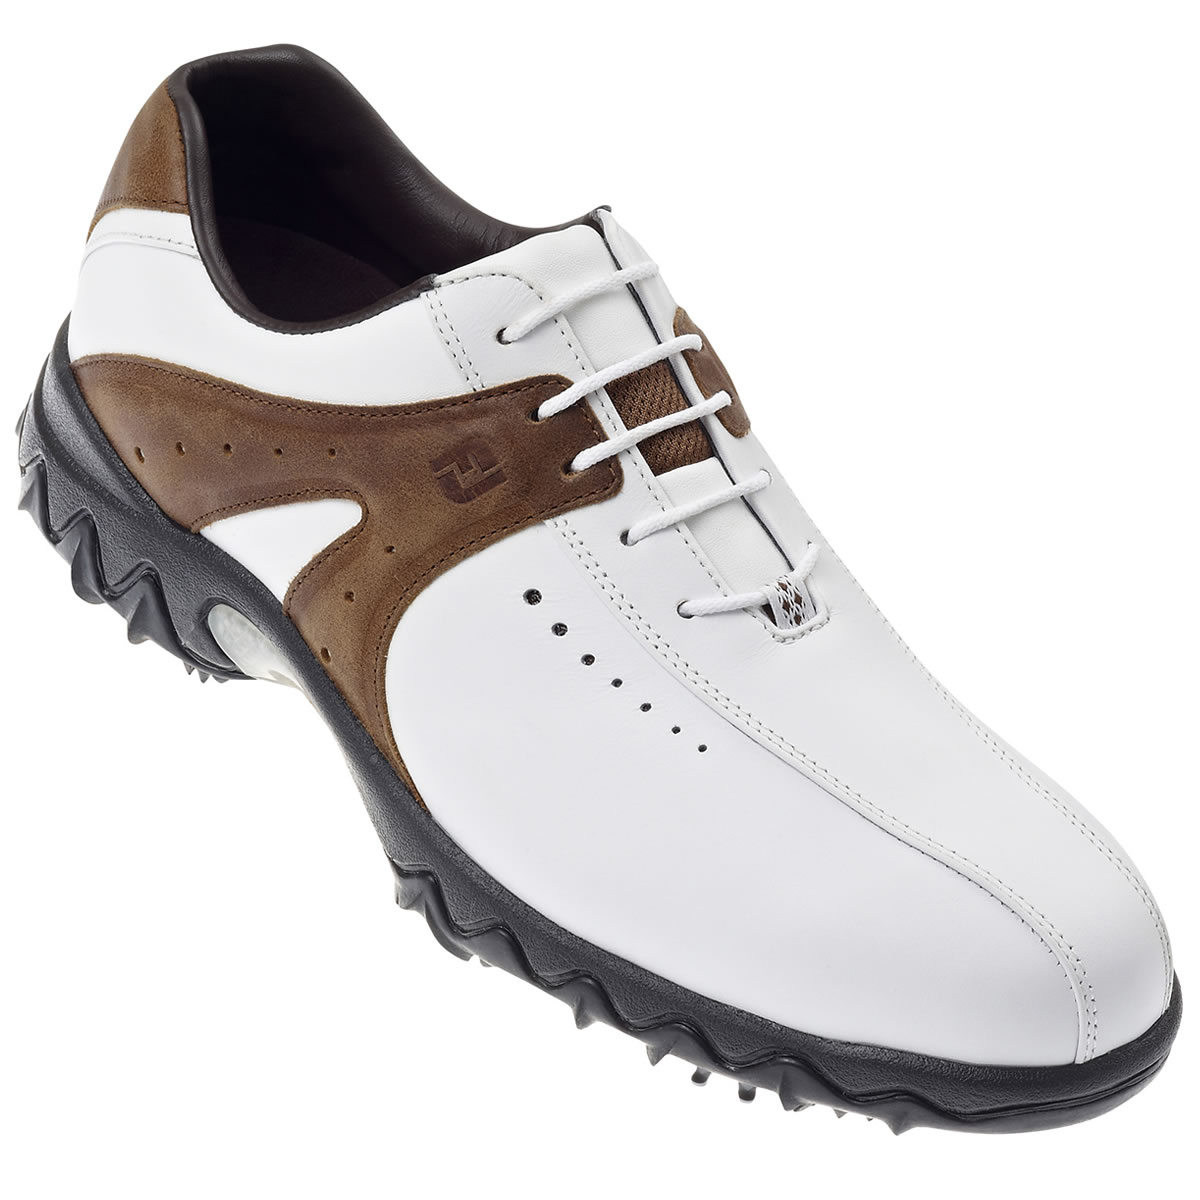 Contour Golf Shoes White/Brown #54163